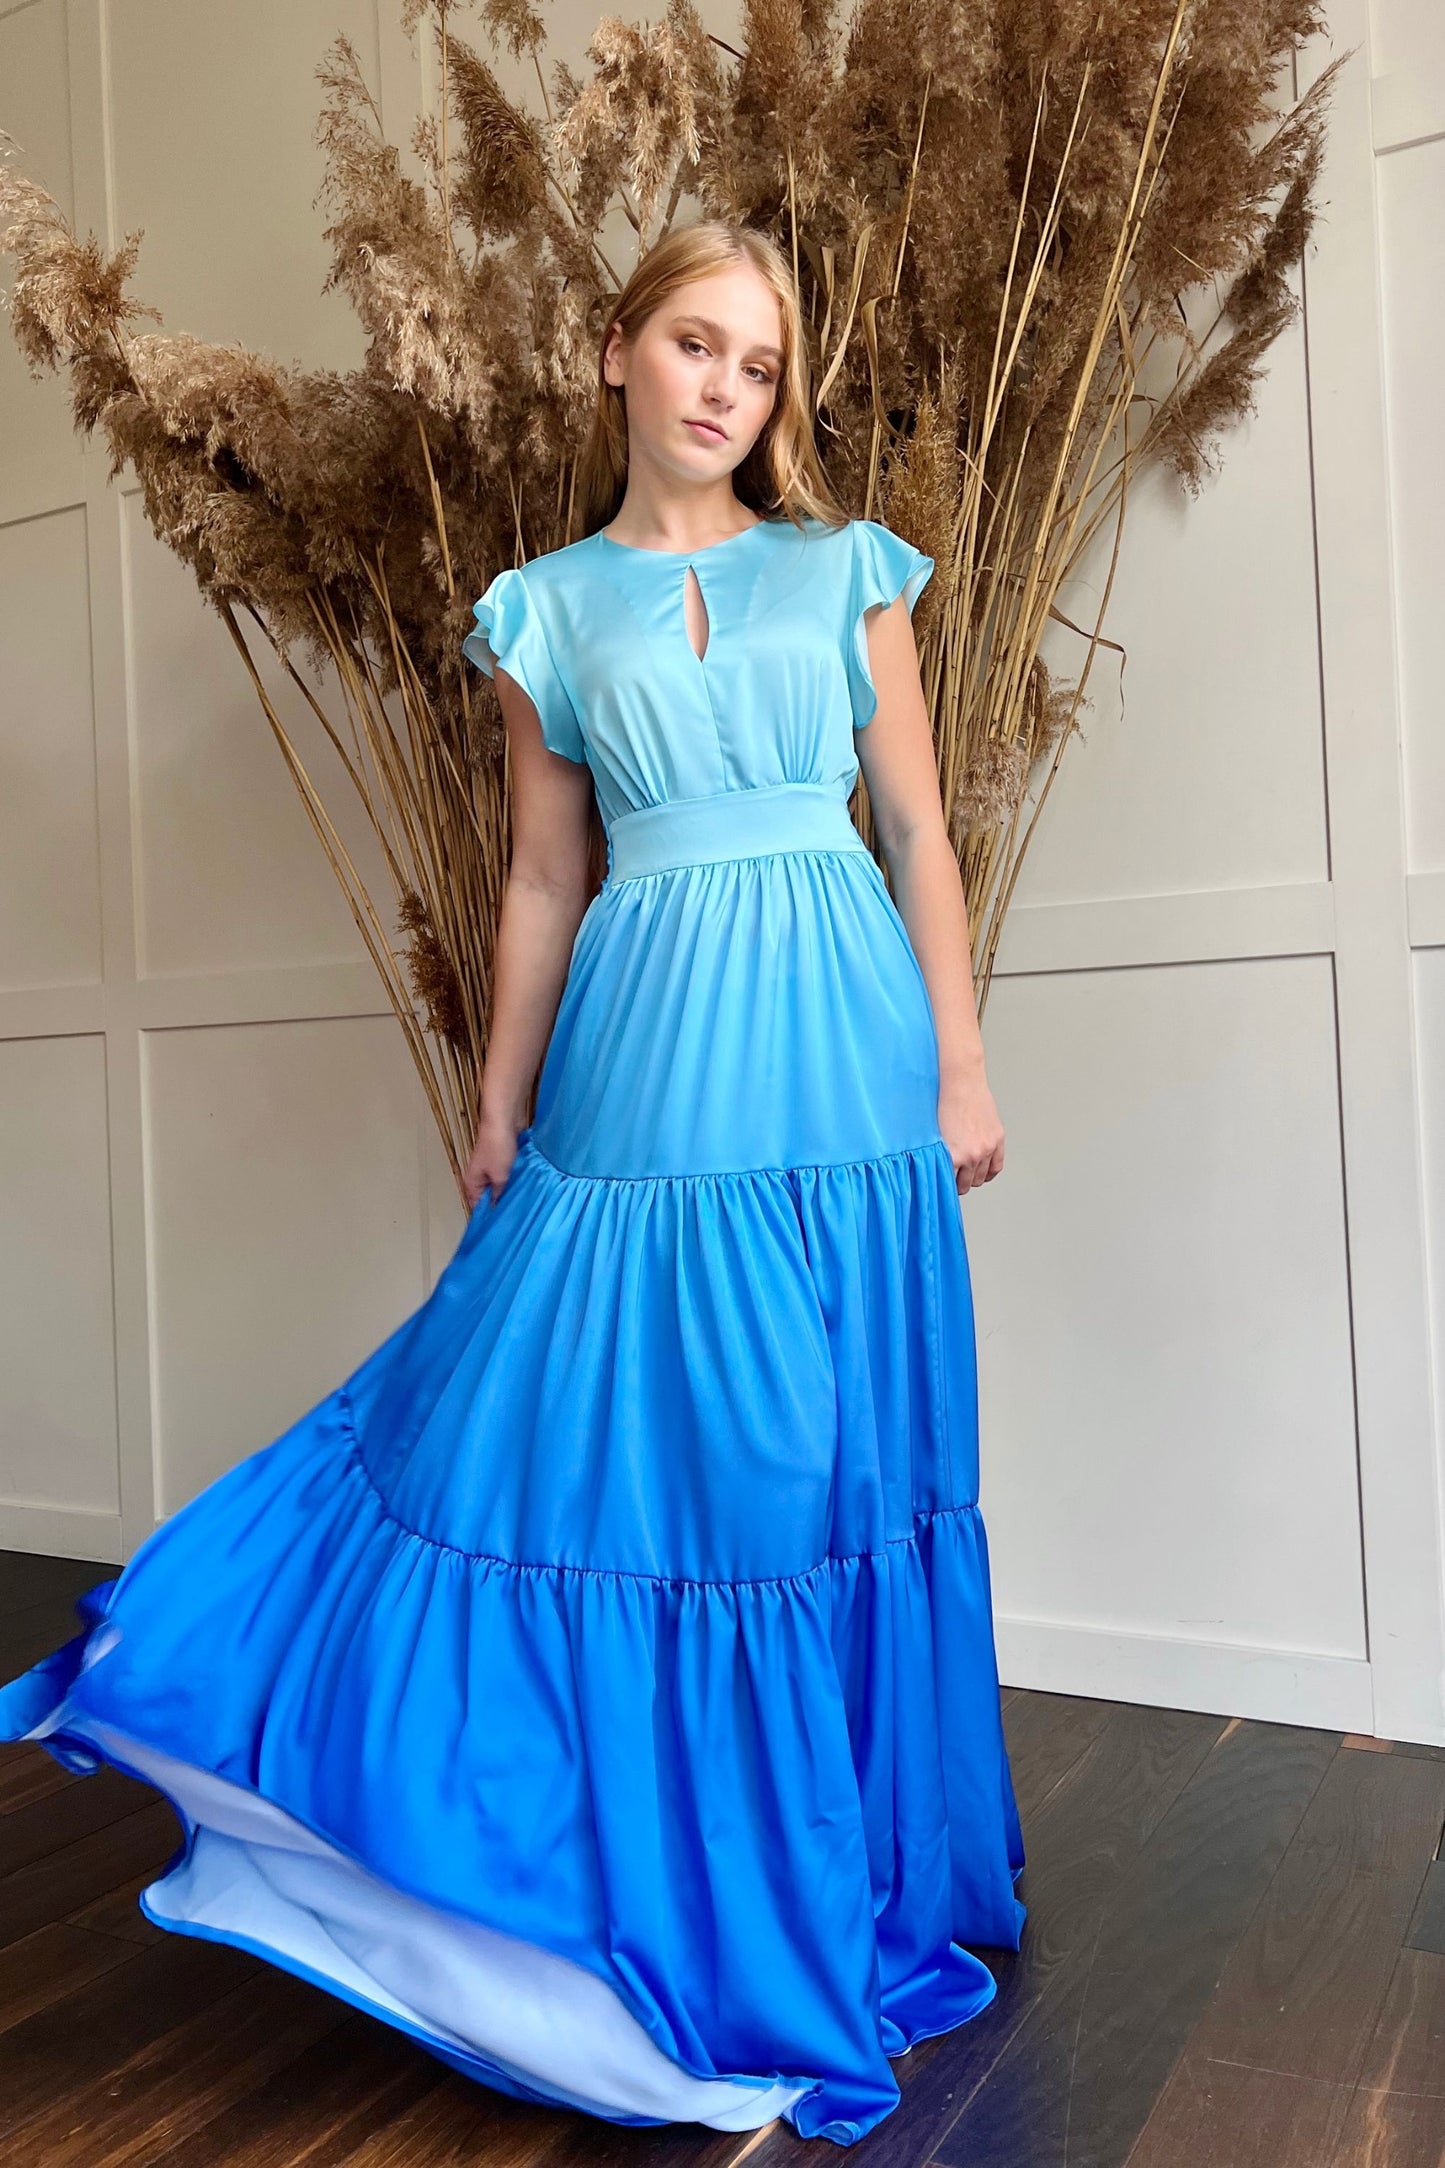 Fairytale dress in blue tones